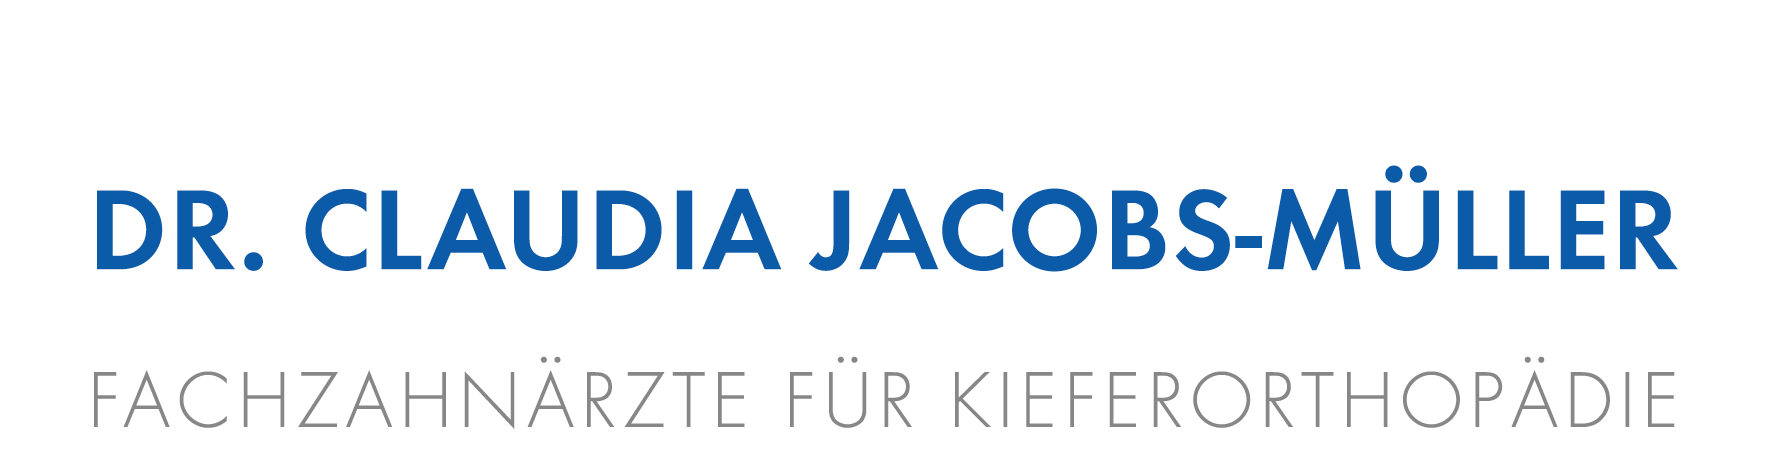 Fachzahnarztpraxis für Kieferorthopädie Dr. Claudia Jacobs-Müller